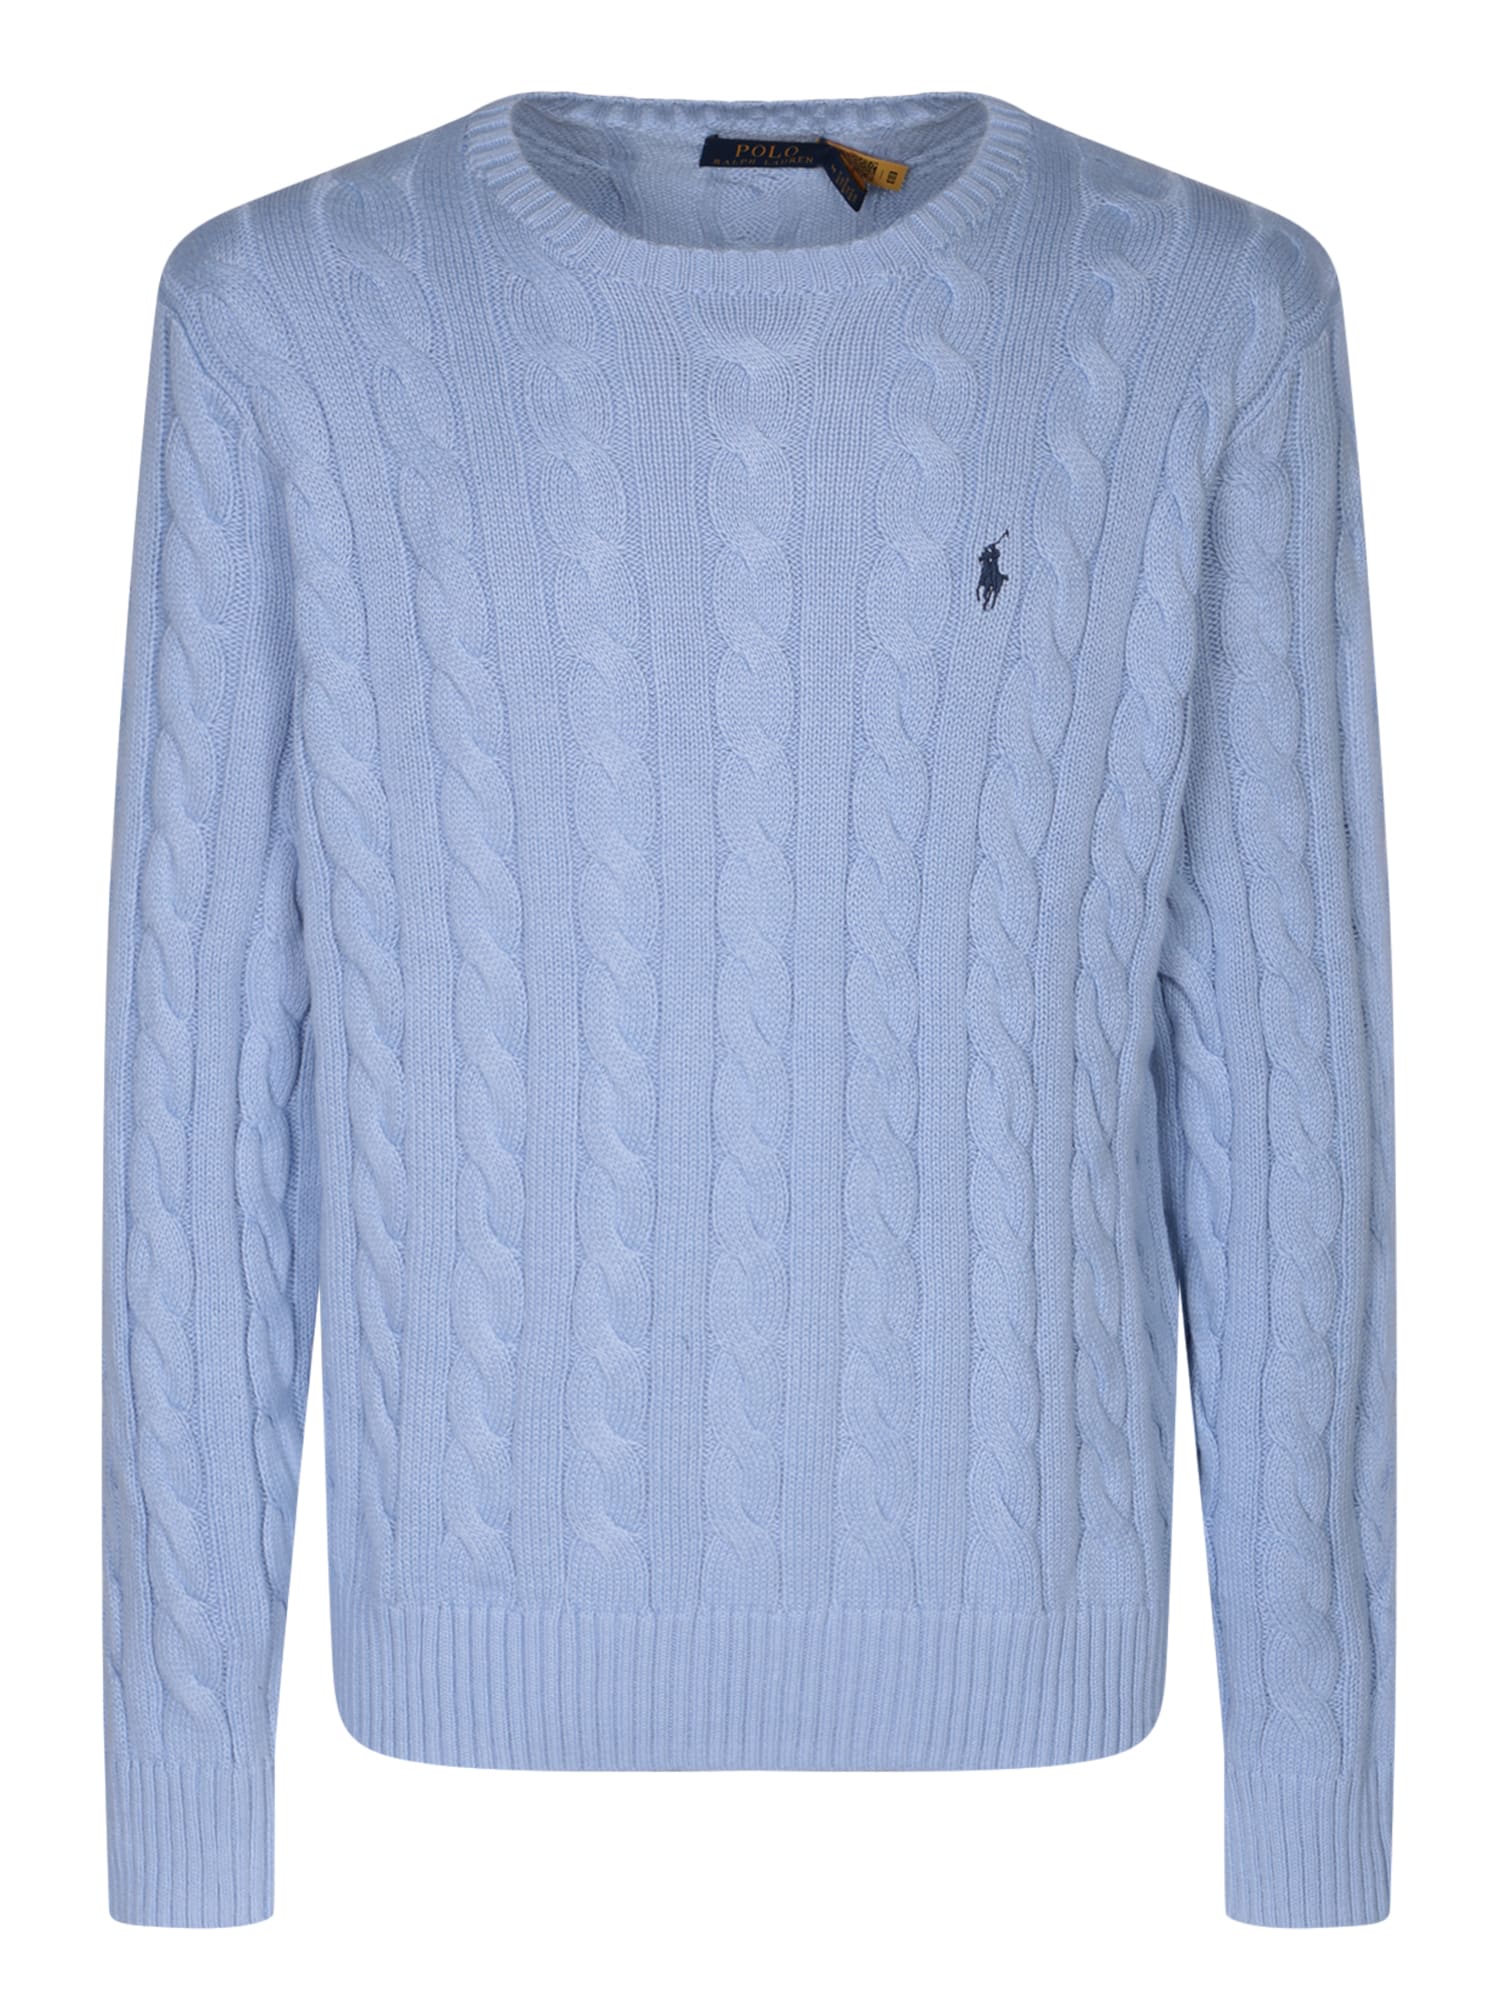 Shop Polo Ralph Lauren Light Blue Cable Knit Cotton Sweater By